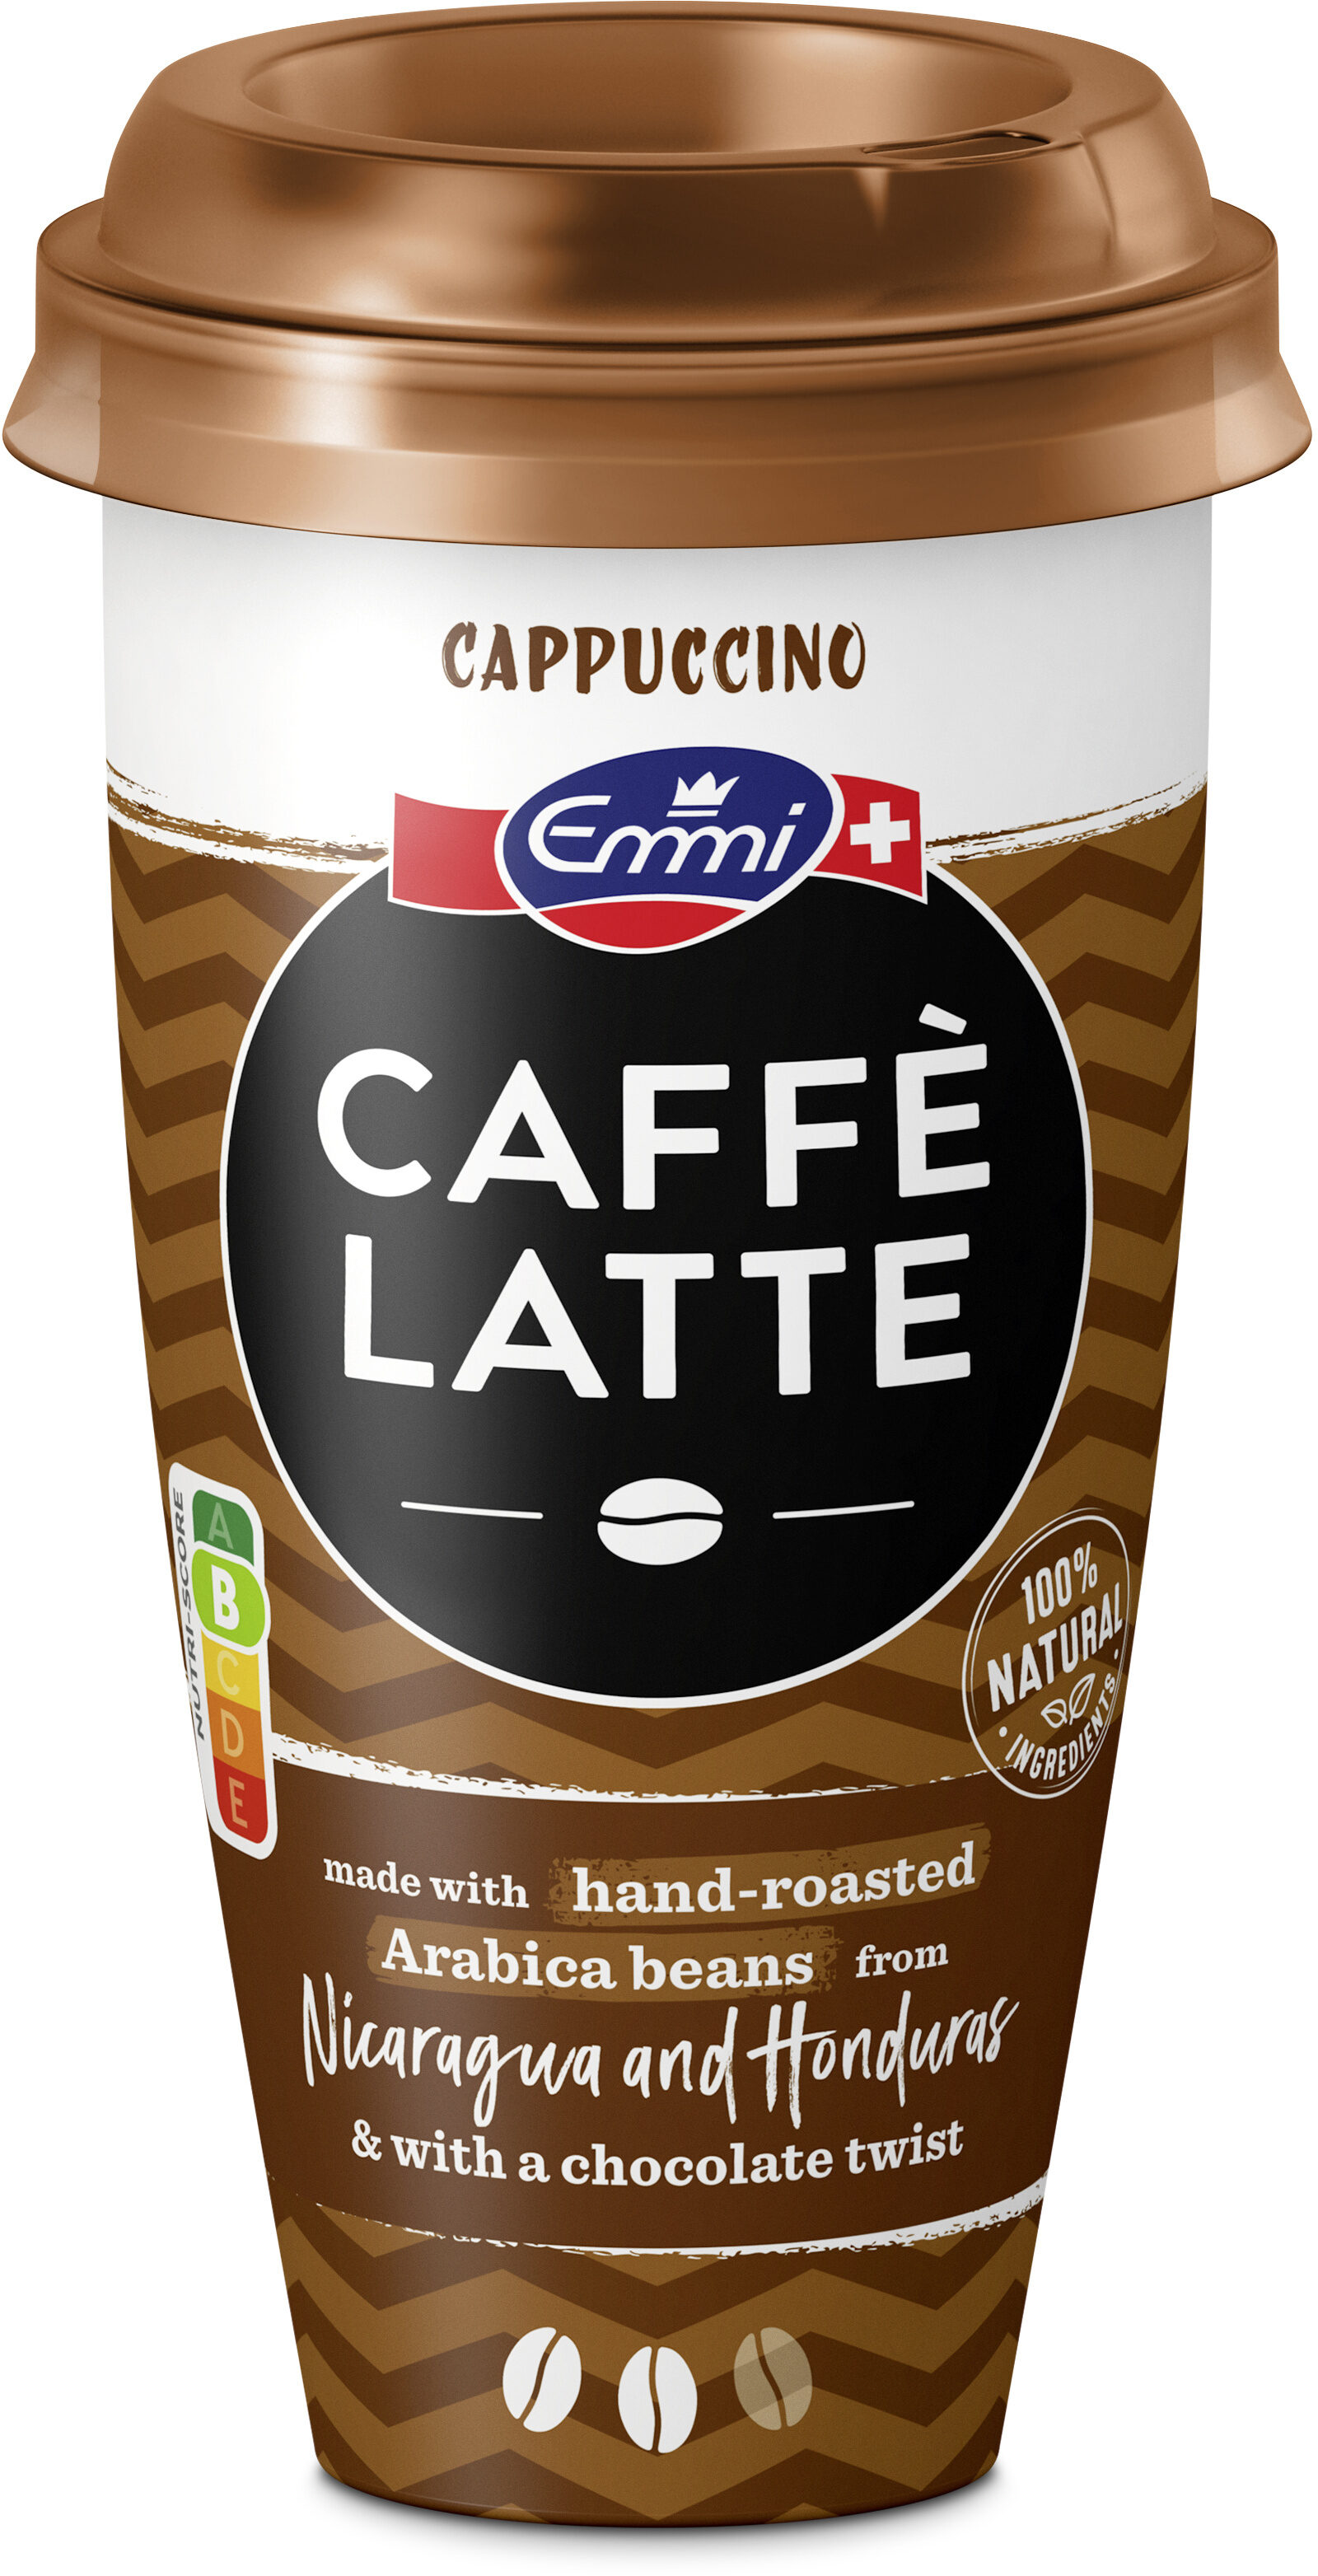 Caffè Latte Cappuccino - Product - en